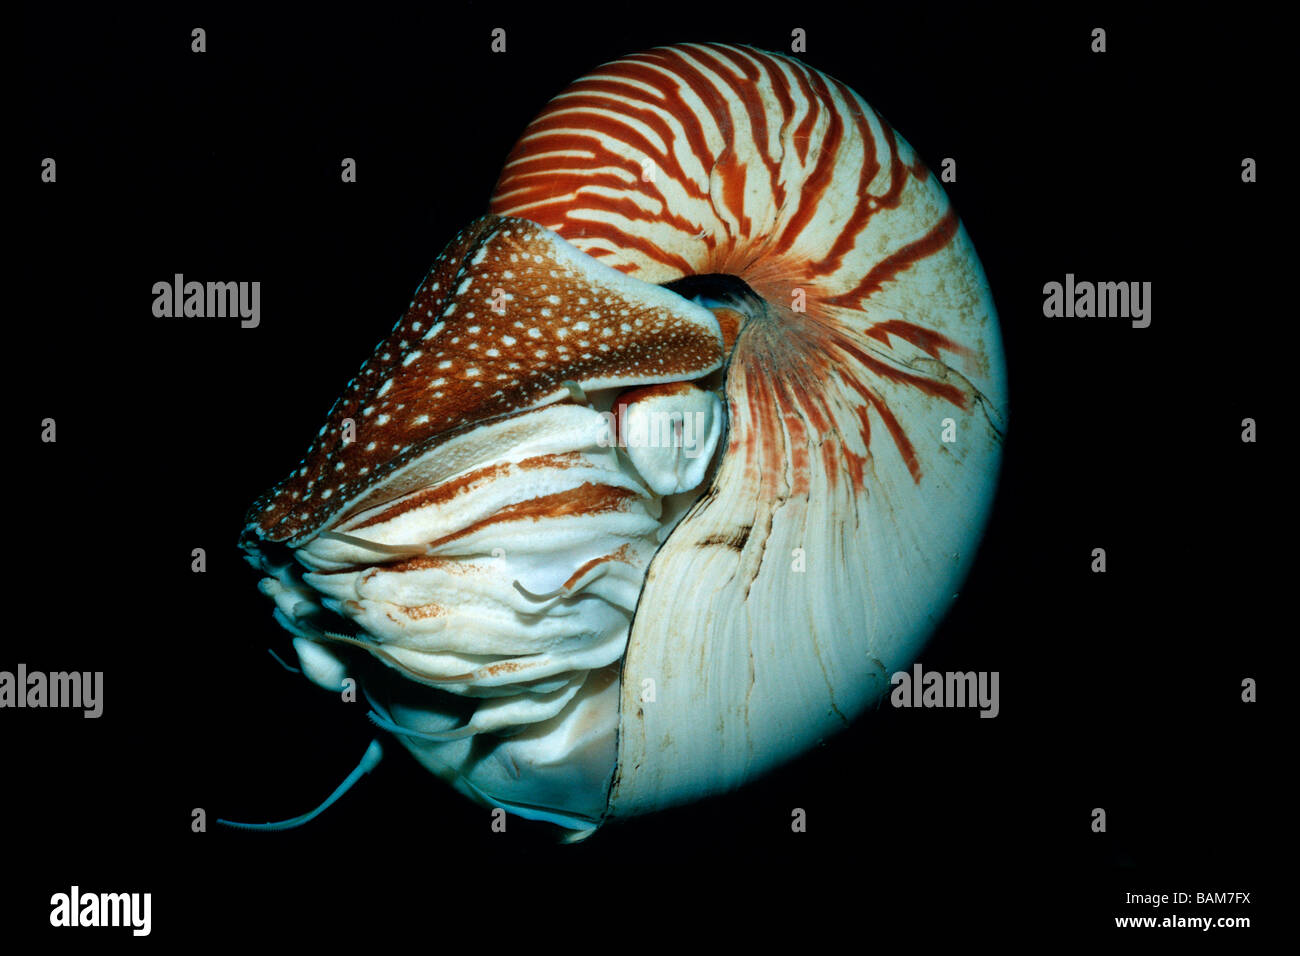 Chambered Nautilus Nautilus belauensis pacifico Micronesia Palau Foto Stock